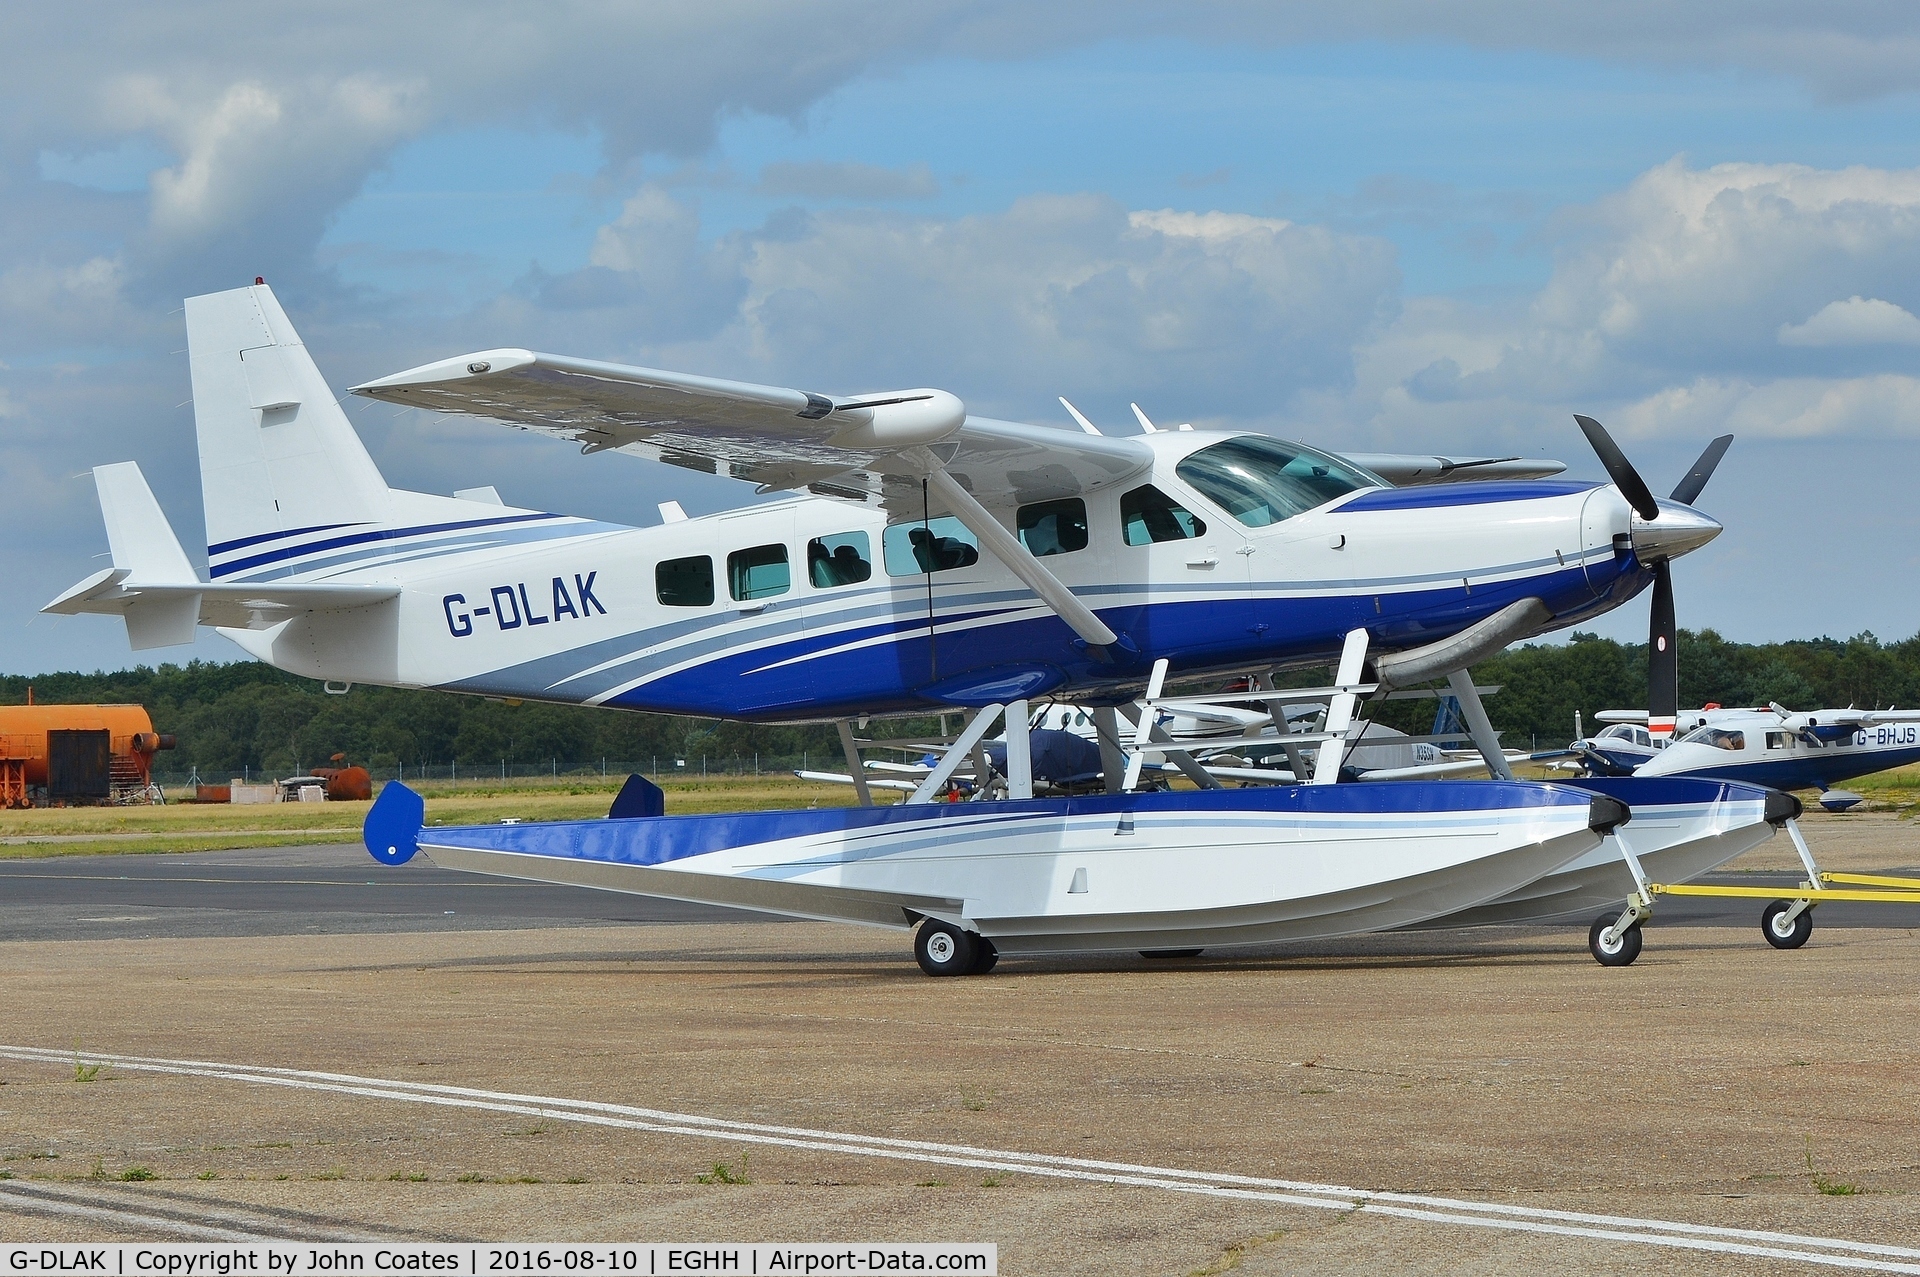 G-DLAK, 2001 Cessna 208 Caravan I C/N 20800340, Just recently repainted